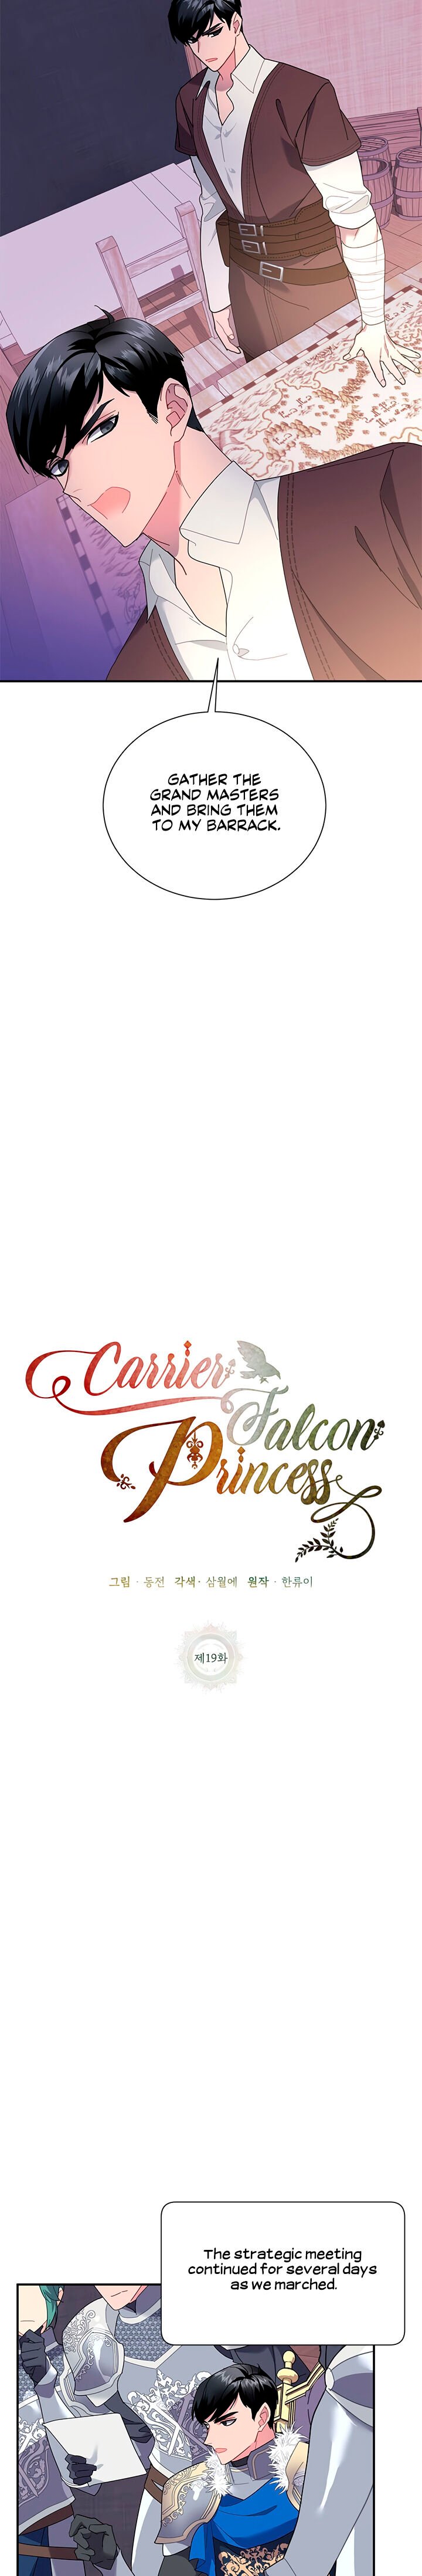 Cavier Falcon Princess chapter 19